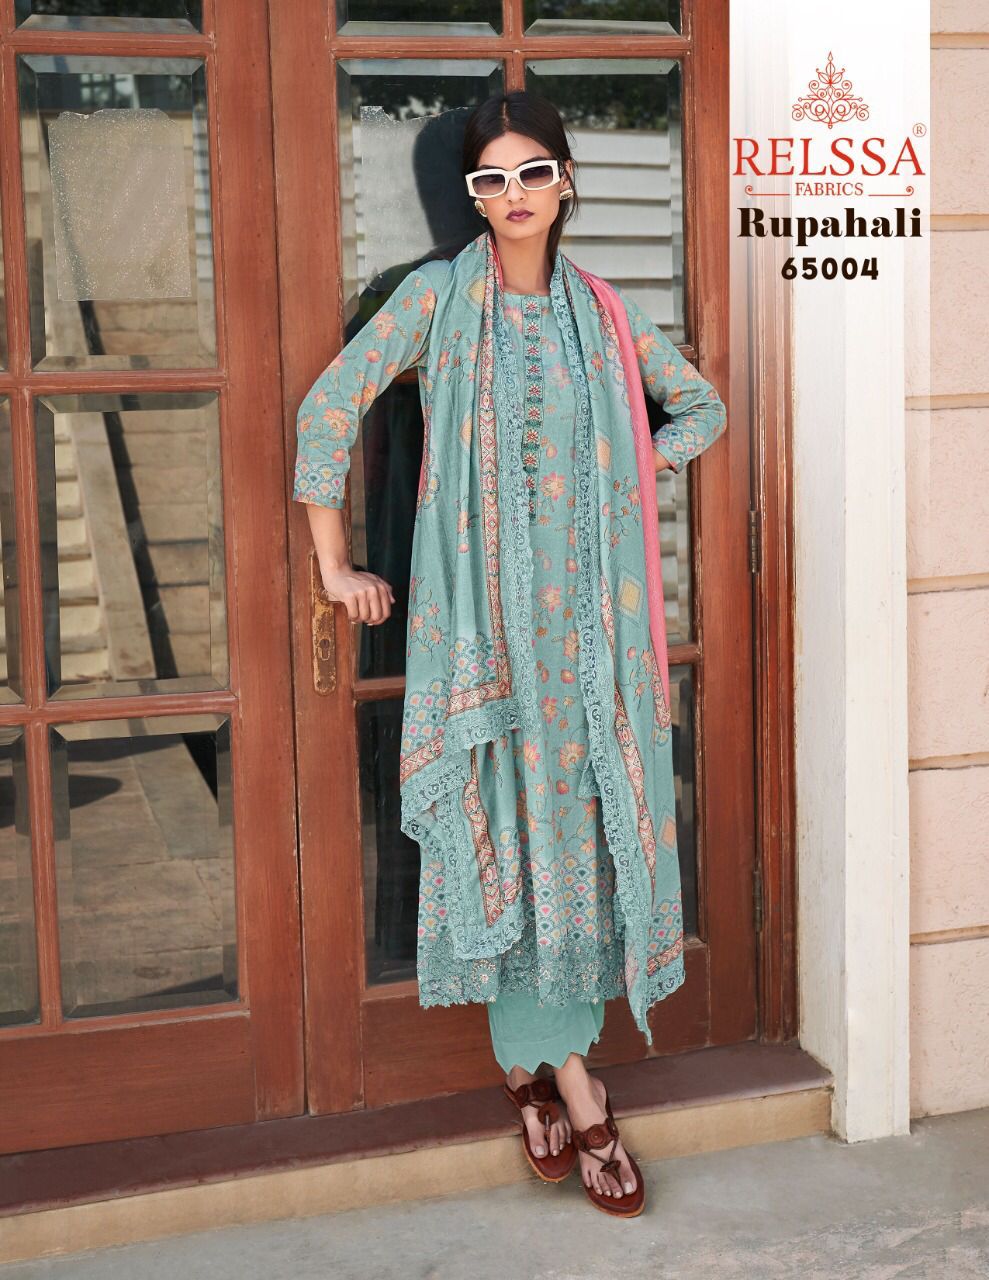 Relssa Fabrics Rupahali 65004